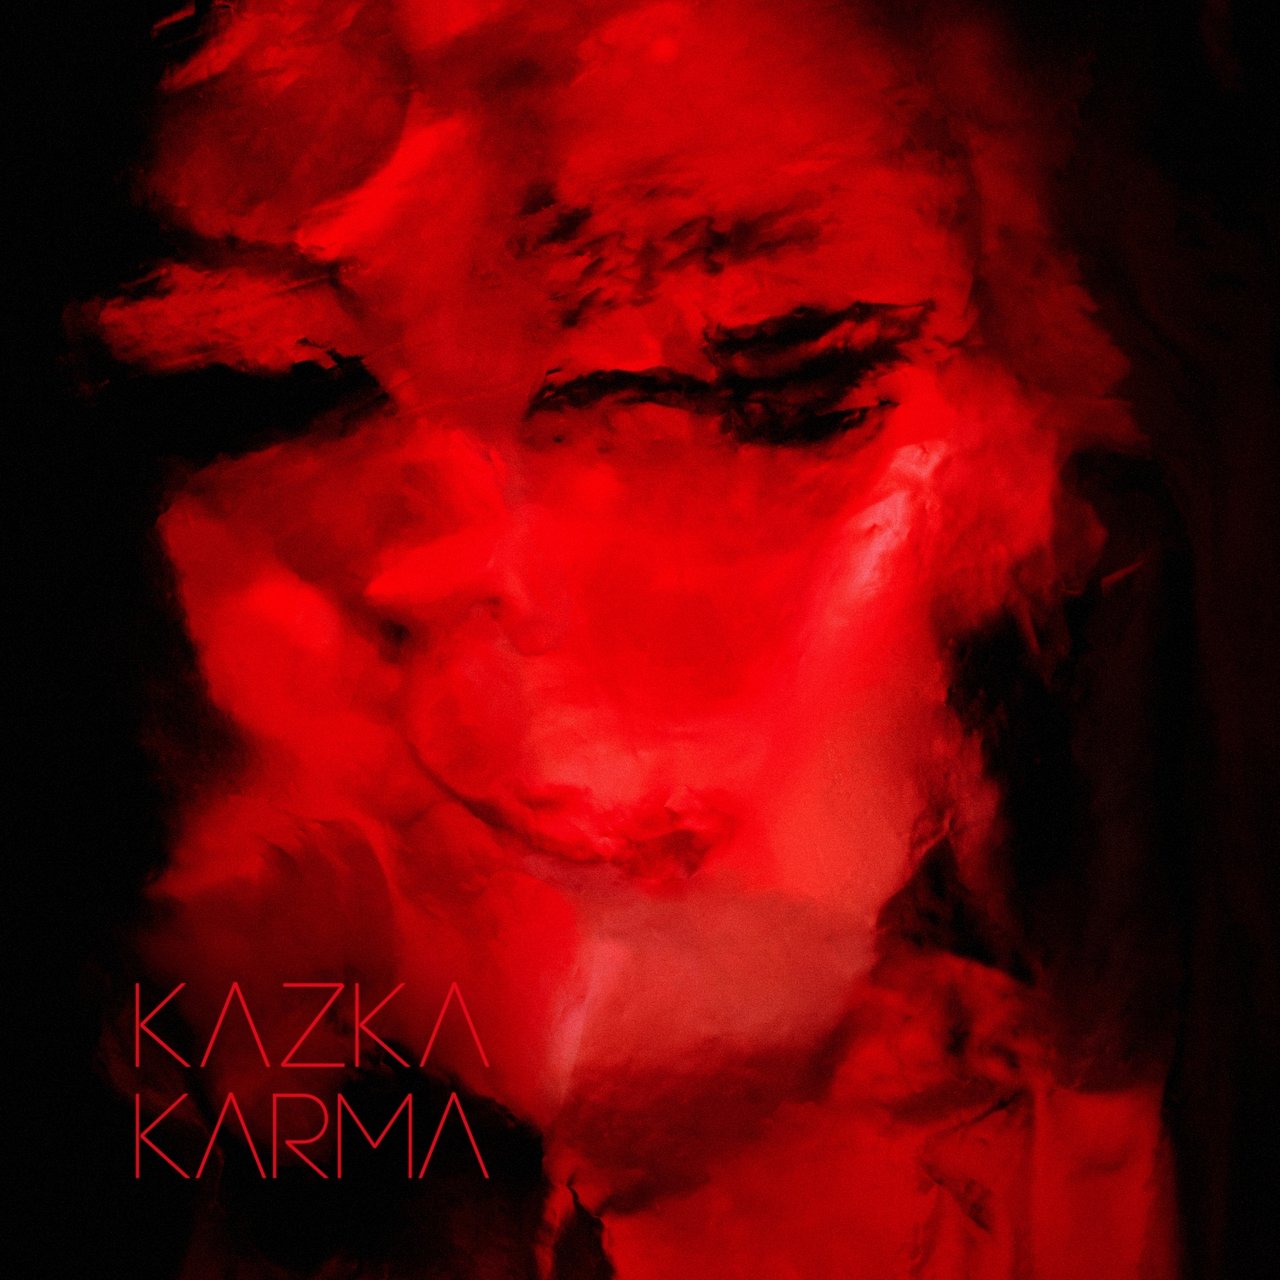 KAZKA KARMA cover artwork